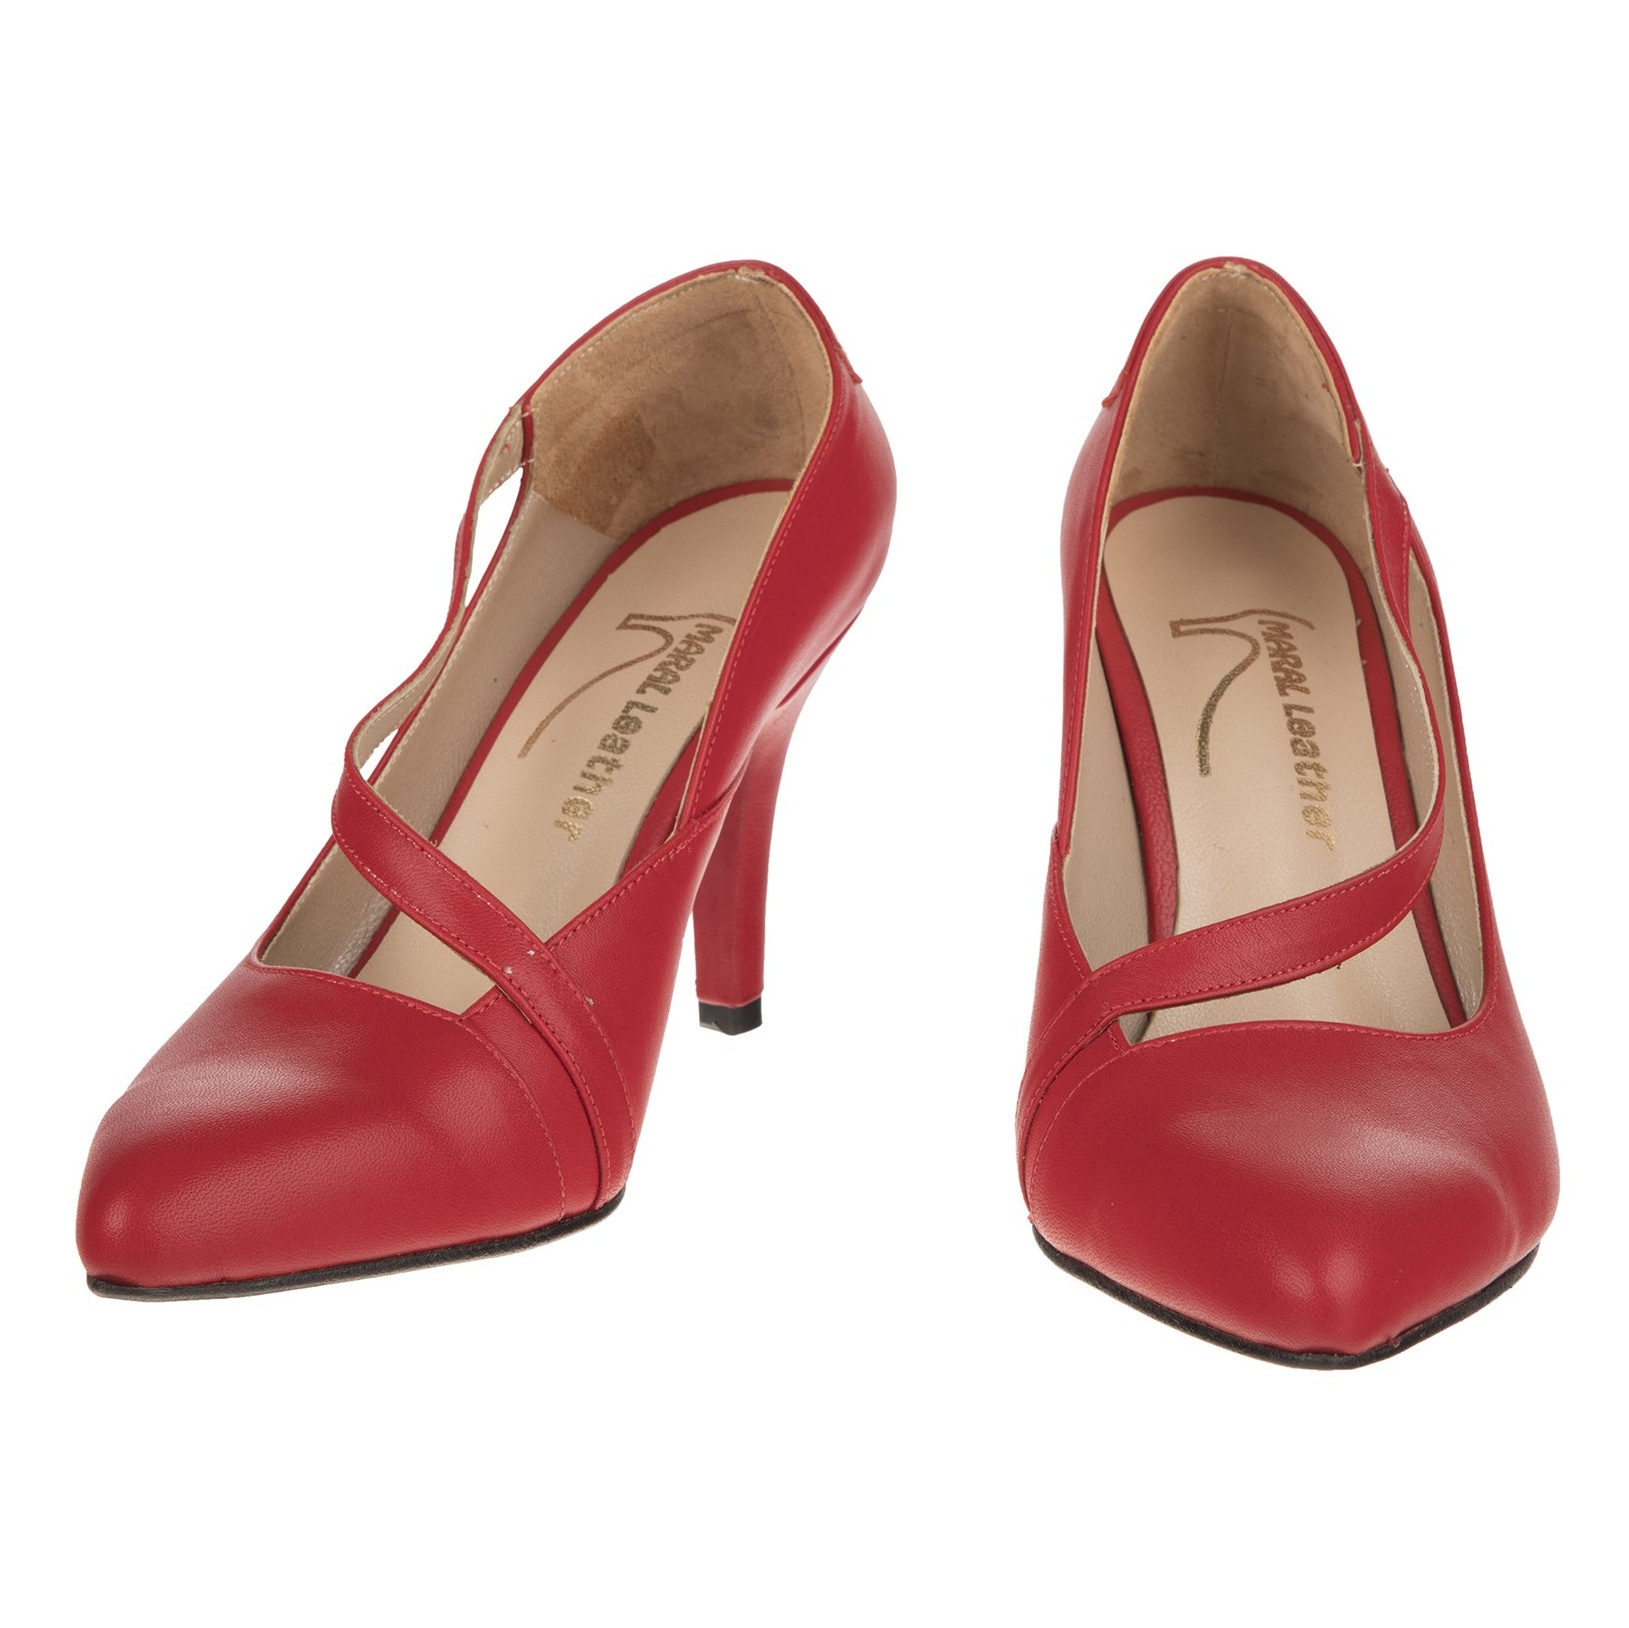 کفش پاشنه بلند چرم زنانه - مارال چرم - قرمز     - 5